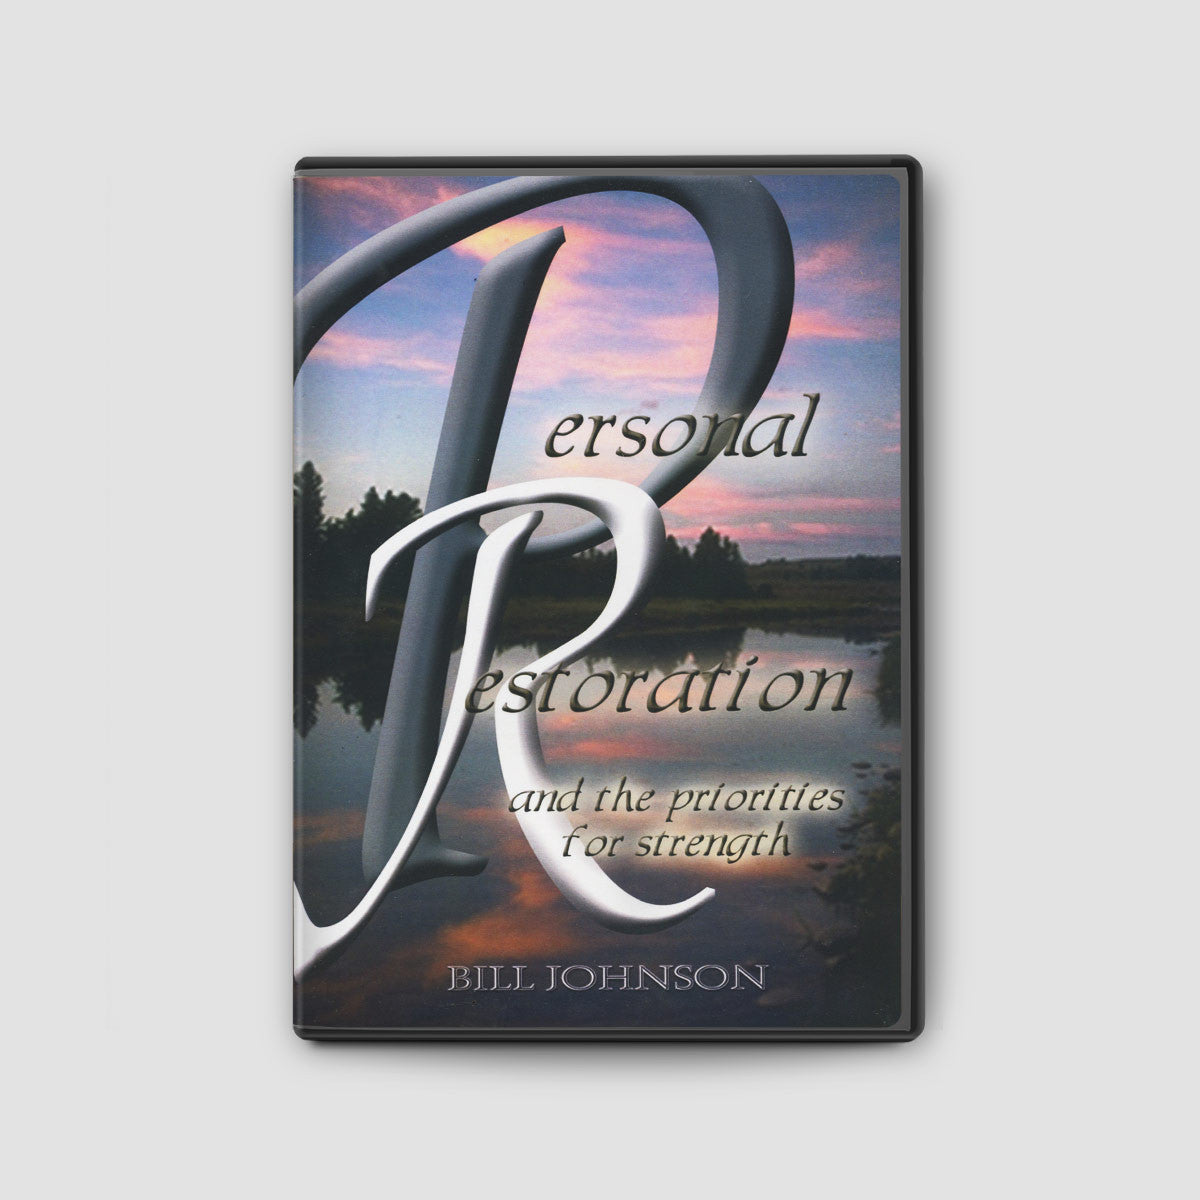 Personal Restoration